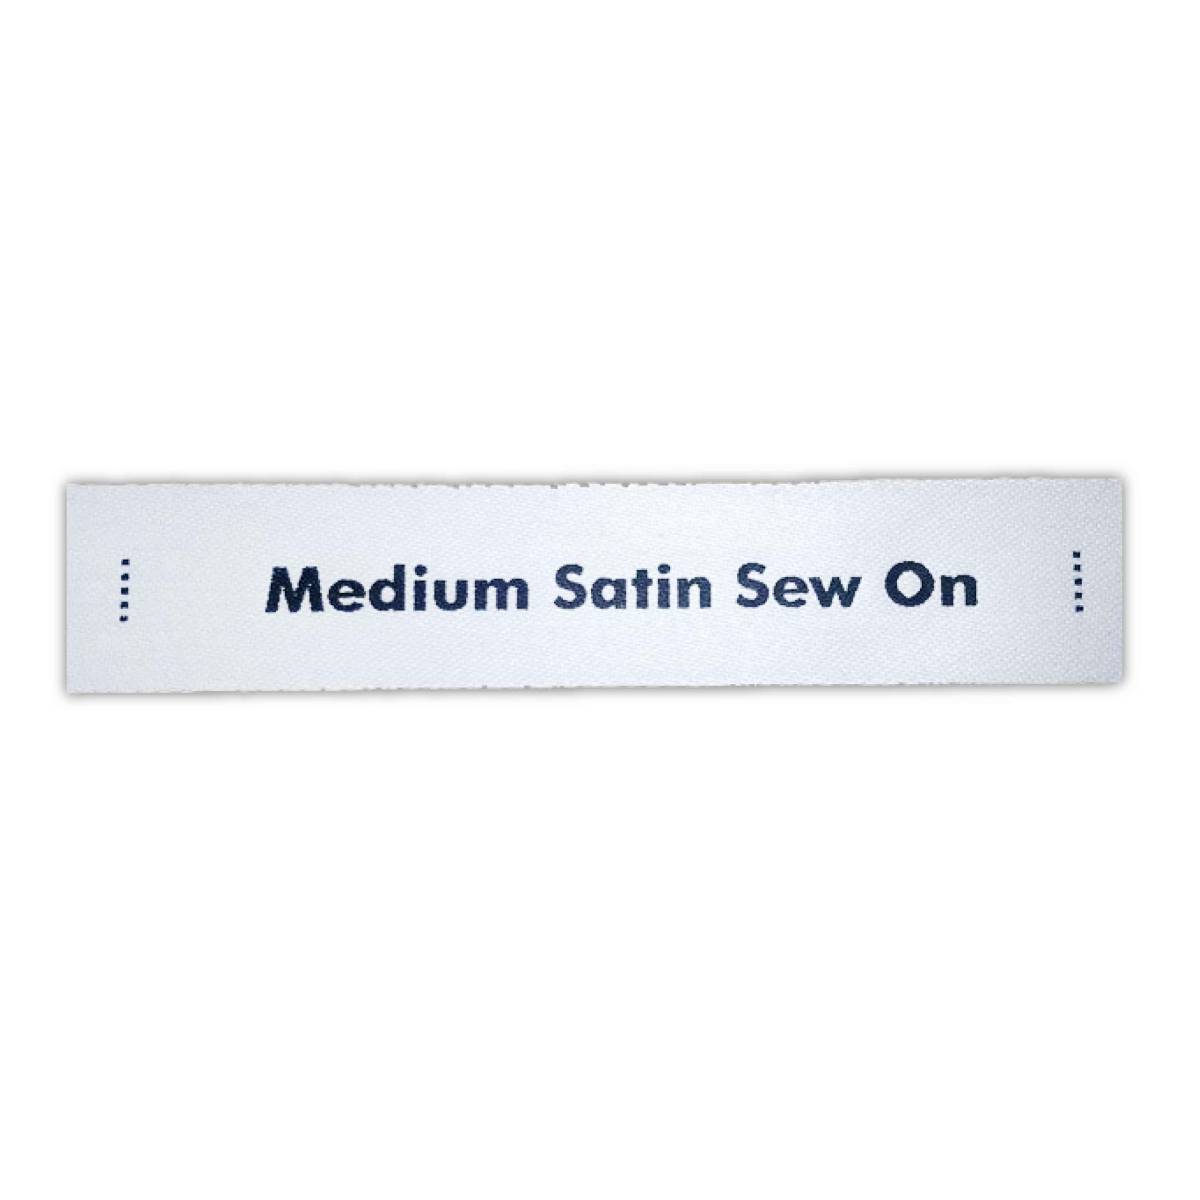 Medium Satin Sew On Labels